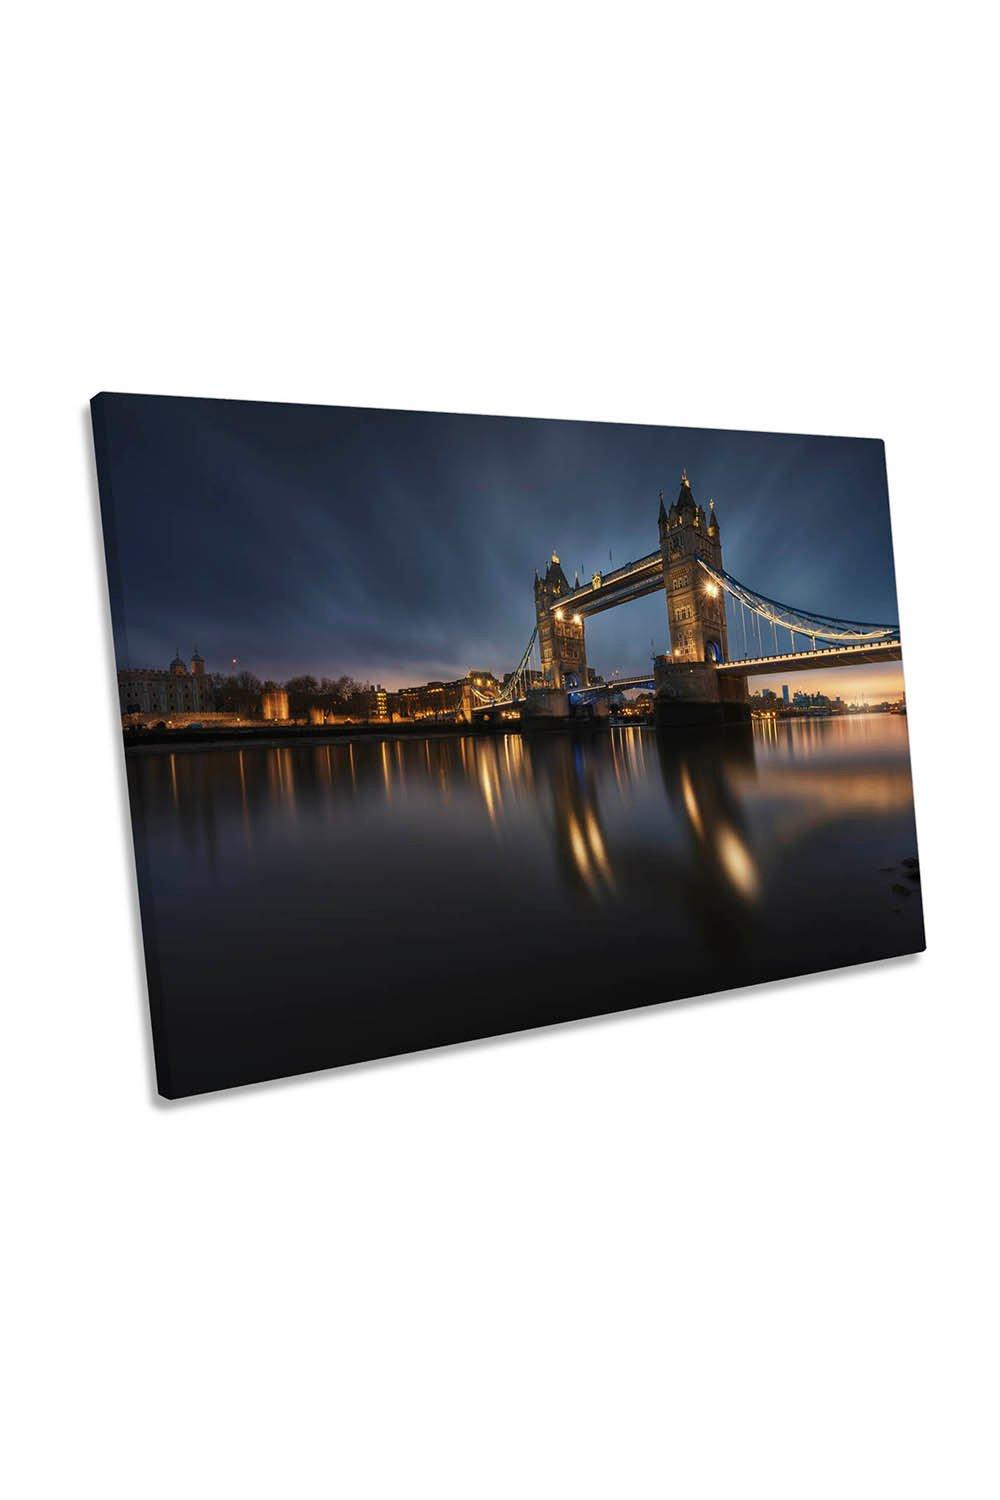 London City Tower Bridge Canvas Wall Art Picture Print